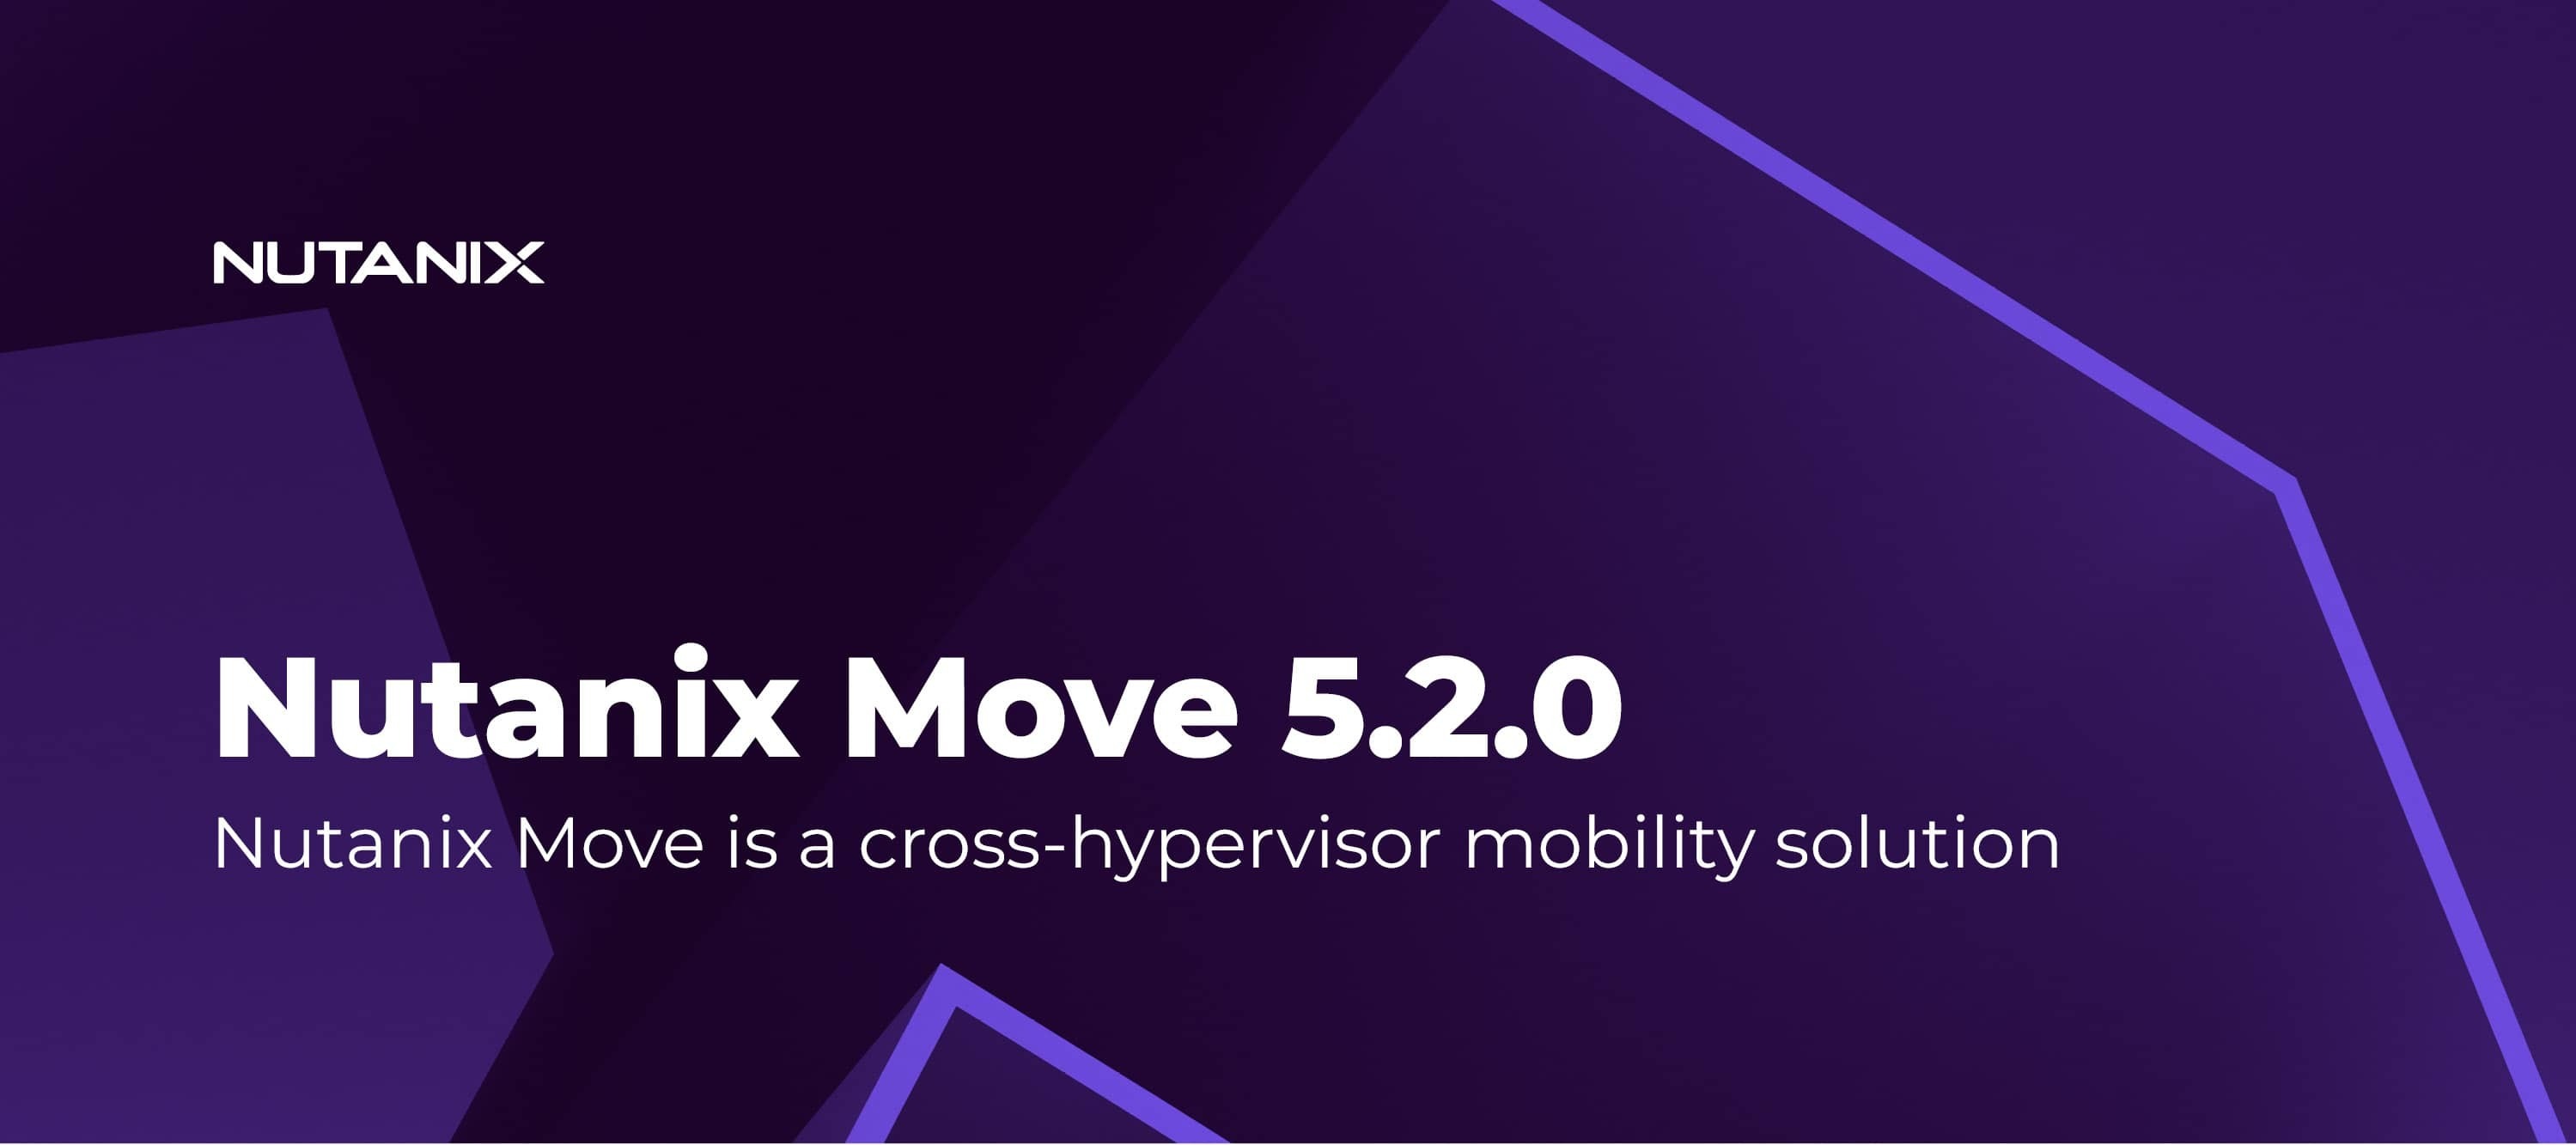 Nutanix Move 5.2.0 Released